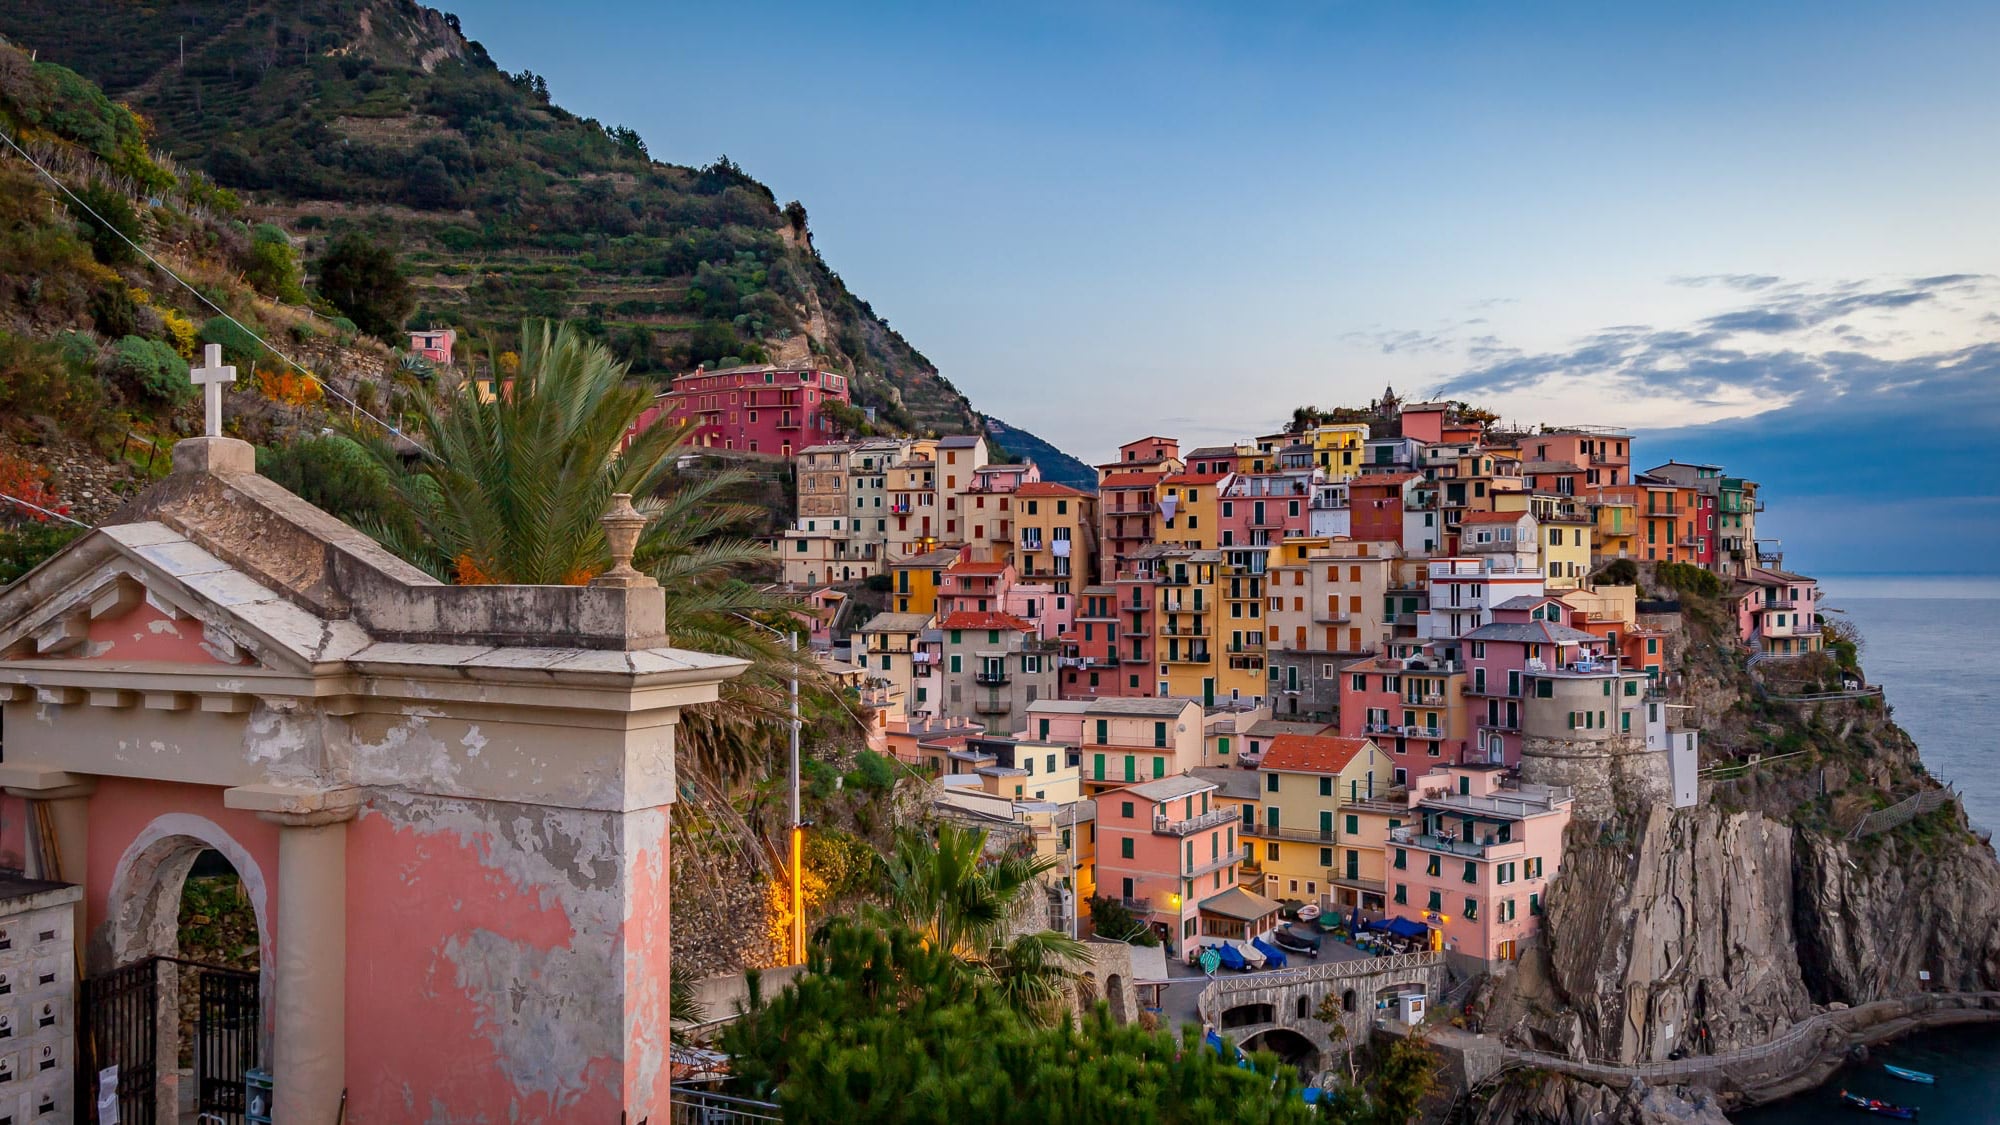 Cinque Terre Italy Travel Guide